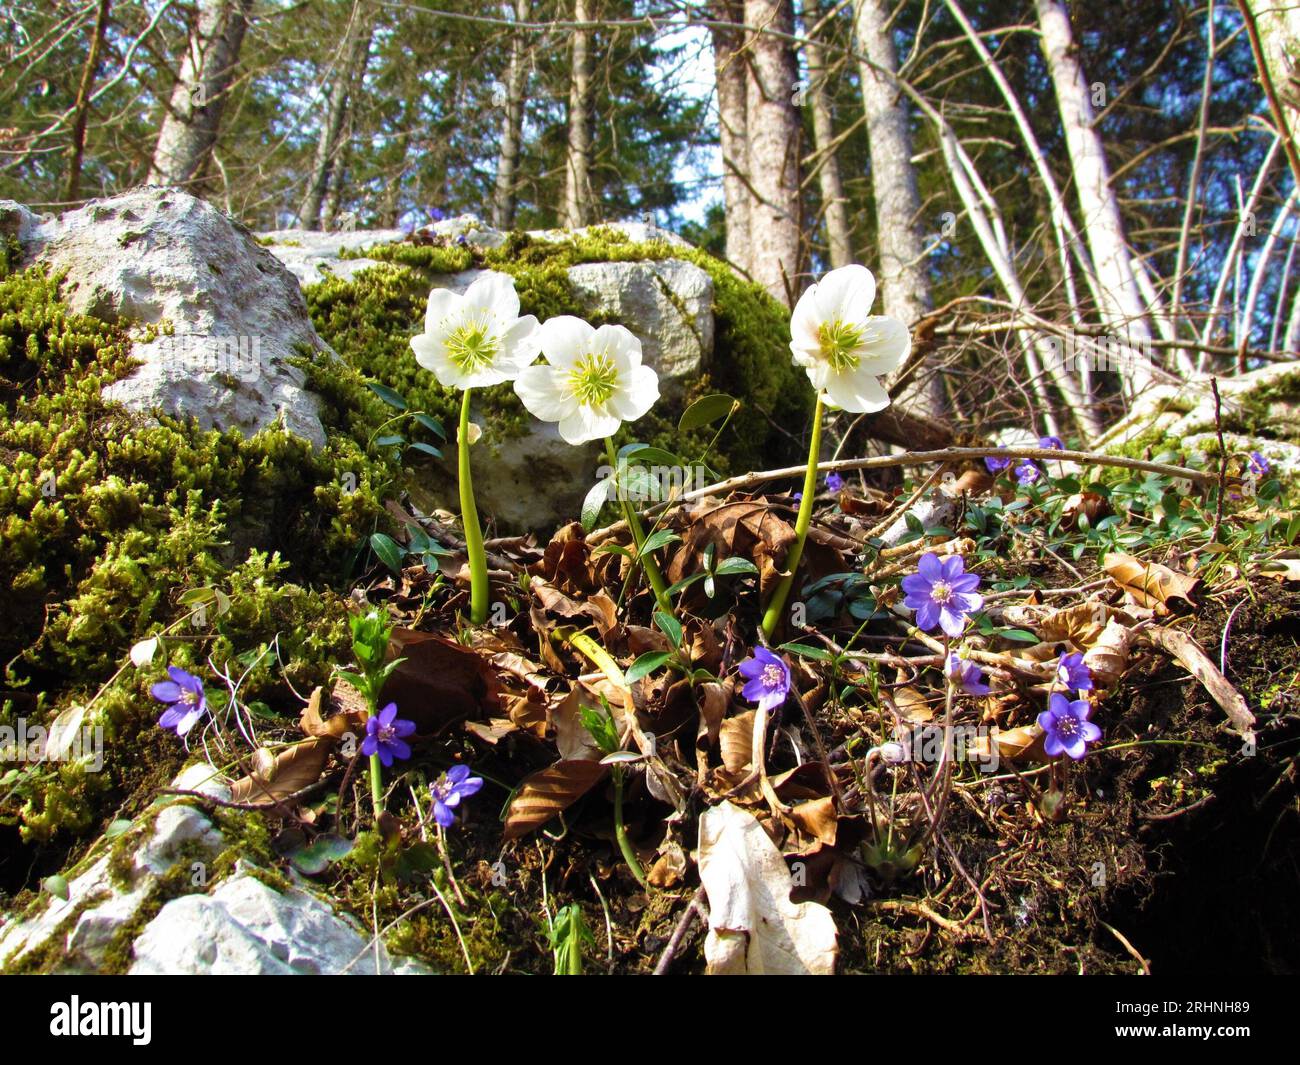 Spring wild garden with white christmas rose (Helleborus niger) and purple common hepatica, liverwort (Anemone hepatica) flowers Stock Photo